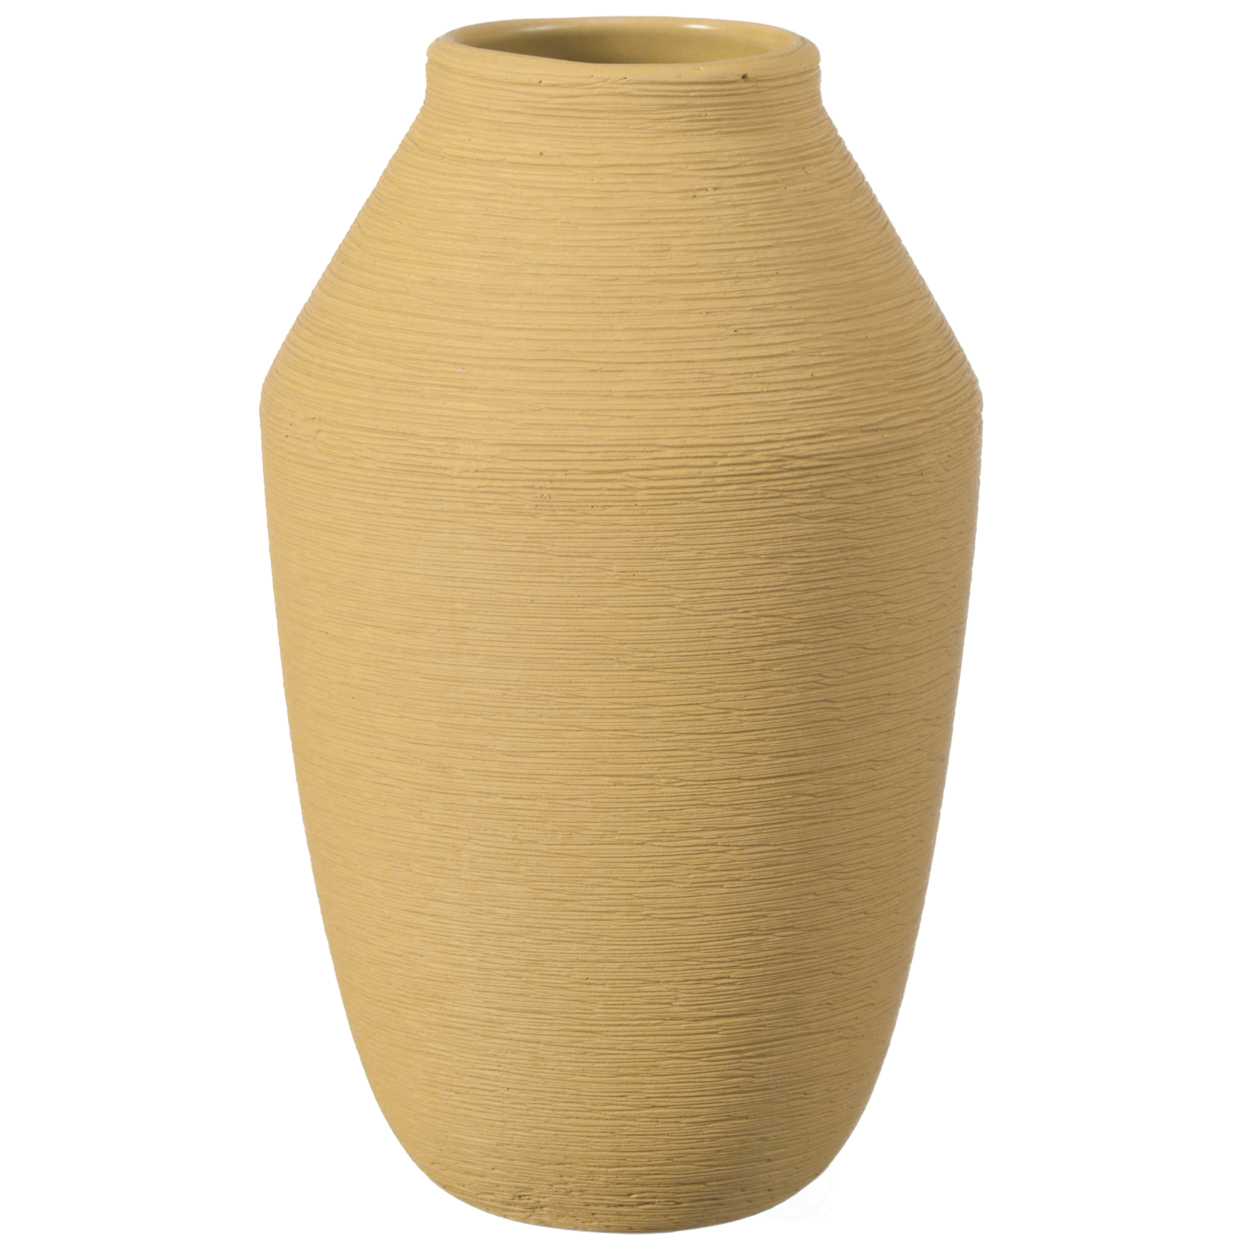 Decorative Ceramic Vase, Modern Style Centerpiece Table Vase - Yellow